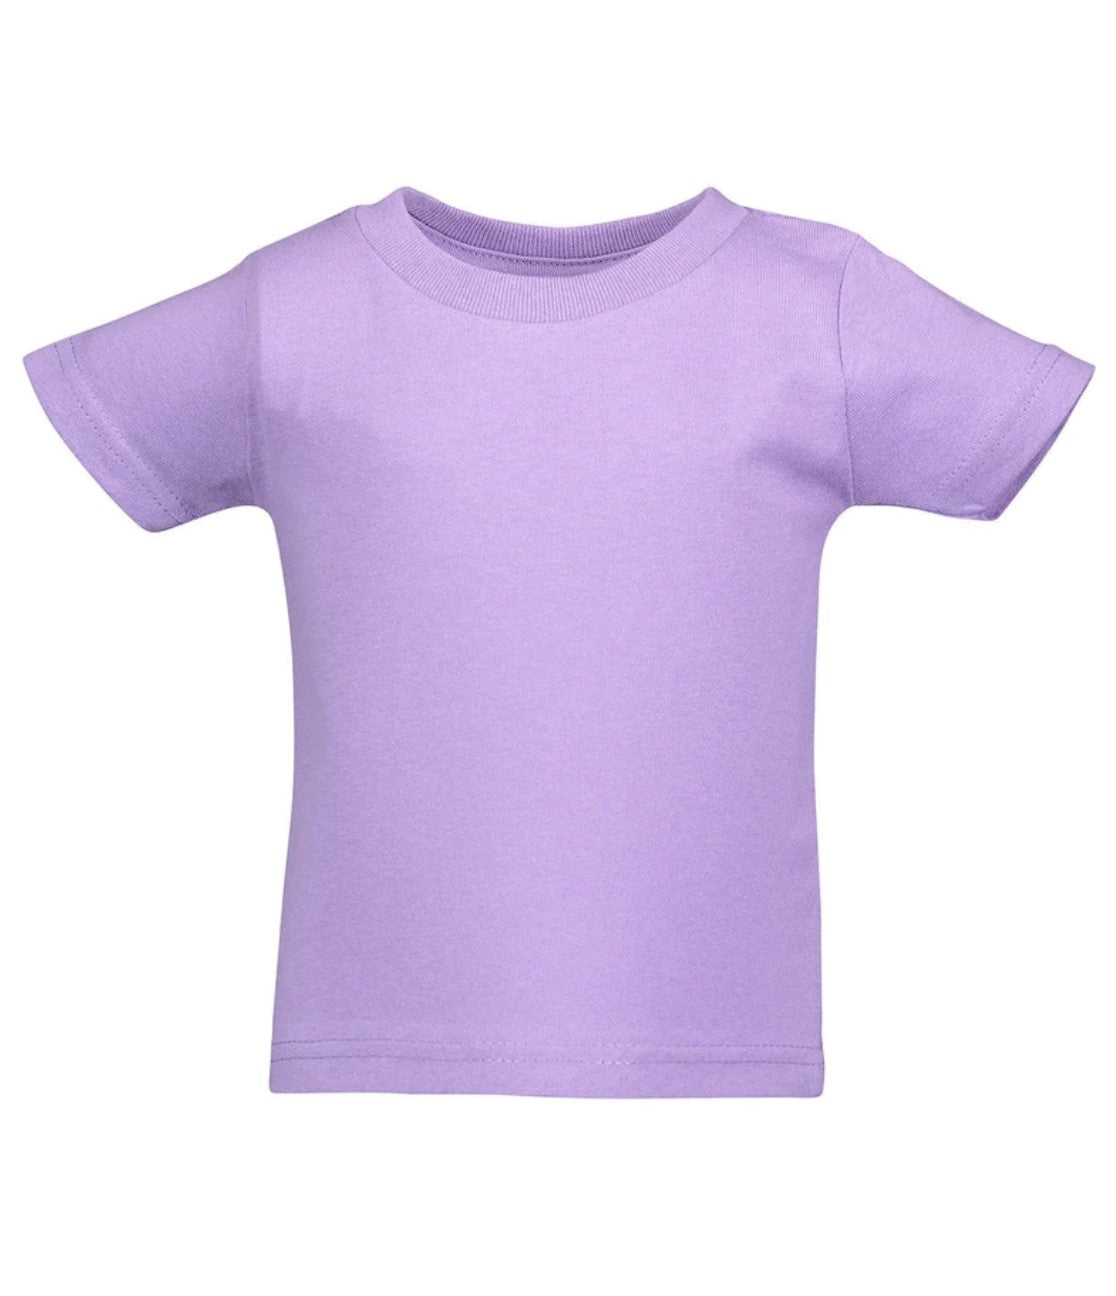 Toddler Jersey T-shirt, 100% Cotton, Lavender